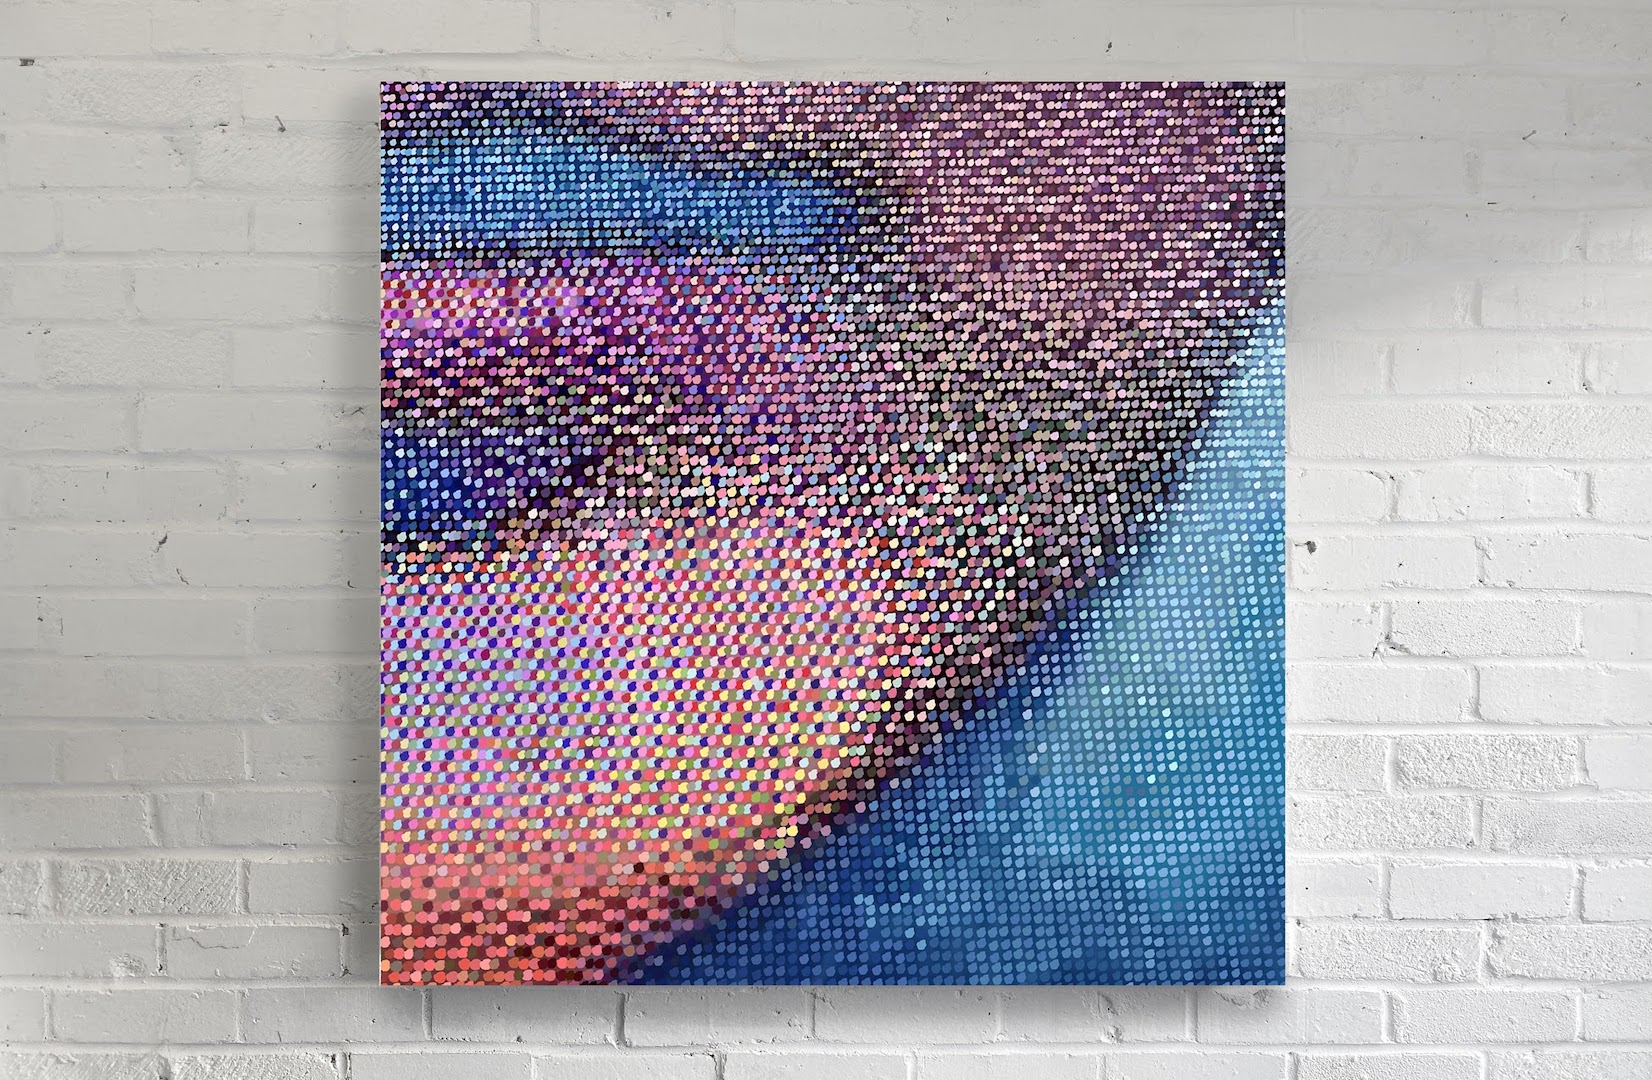 Pixelated Screen Study 4. 2021. Acrylic on canvas. 100 x 100 cm.